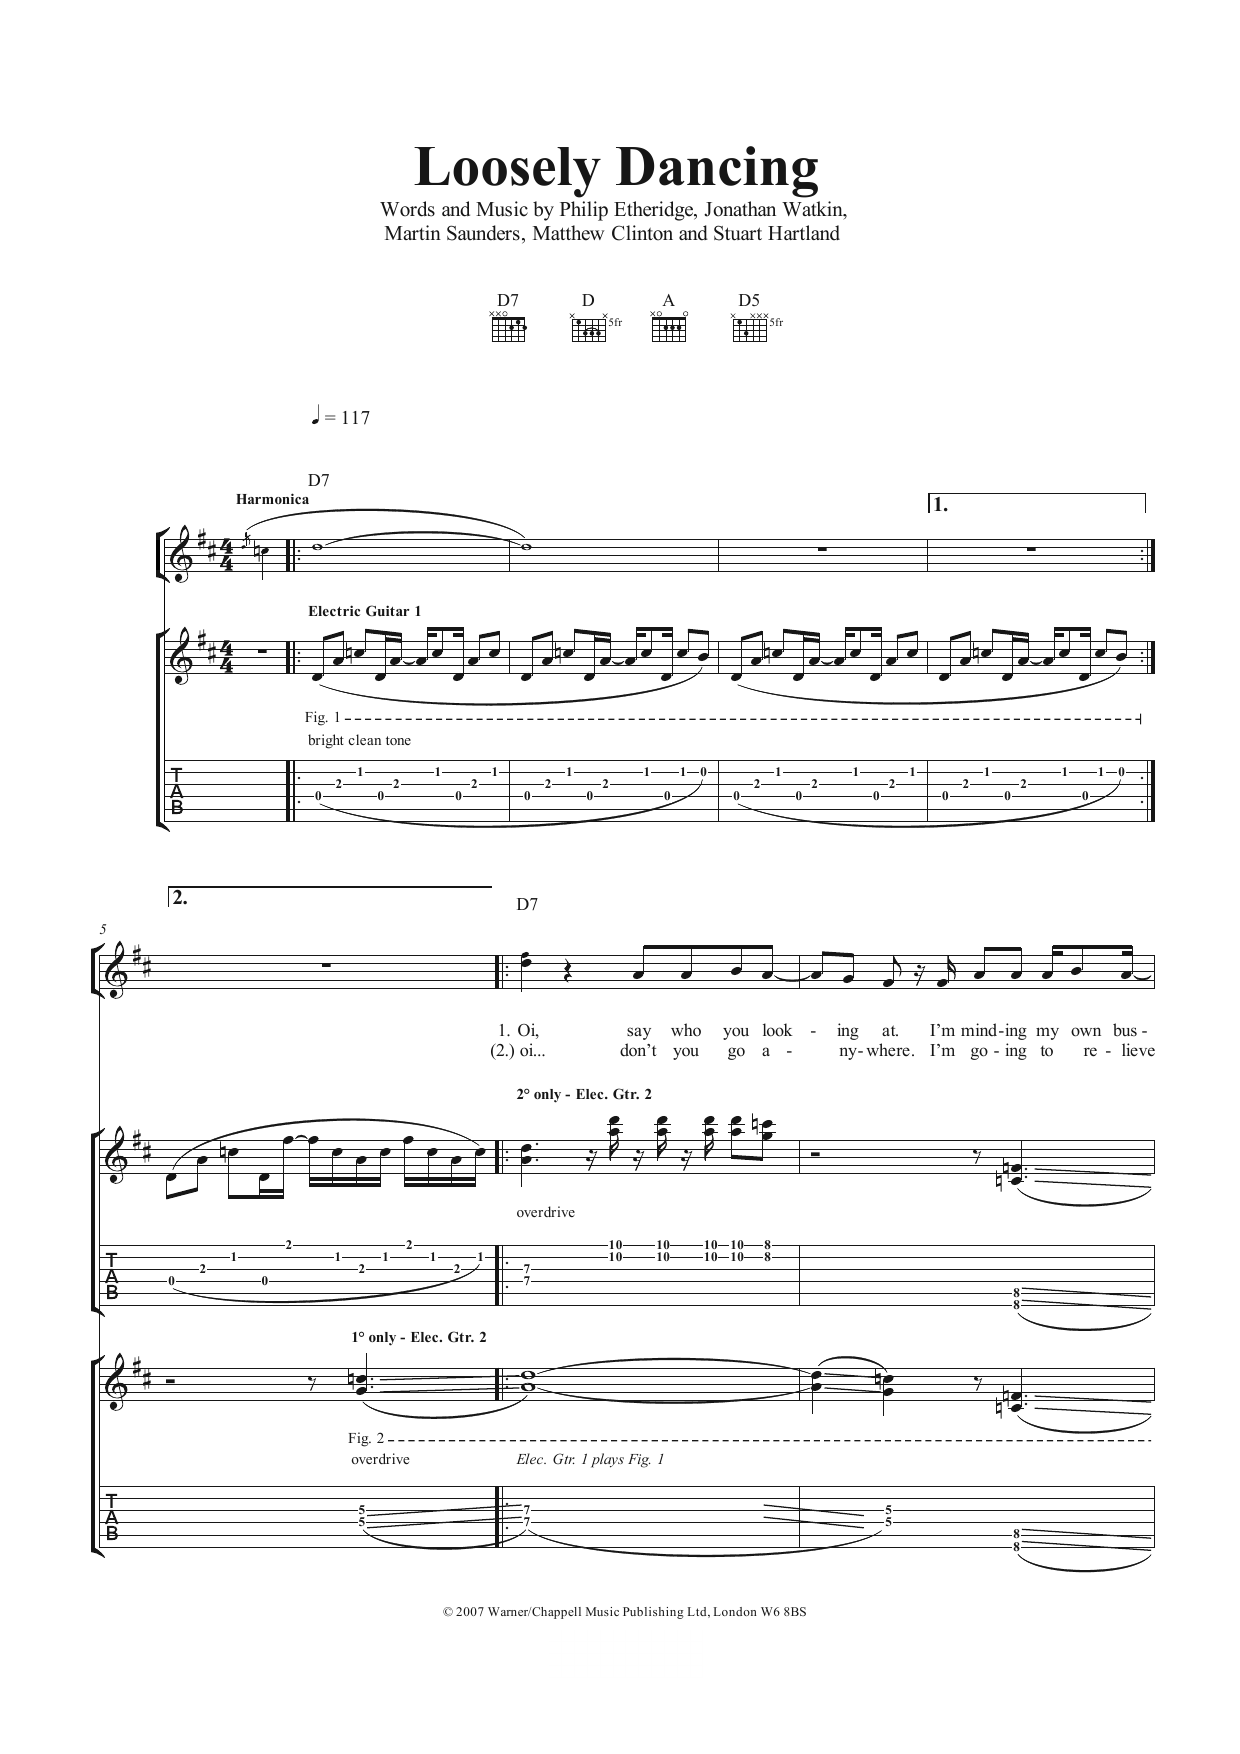 The Twang Loosely Dancing Sheet Music Notes & Chords for Guitar Tab - Download or Print PDF